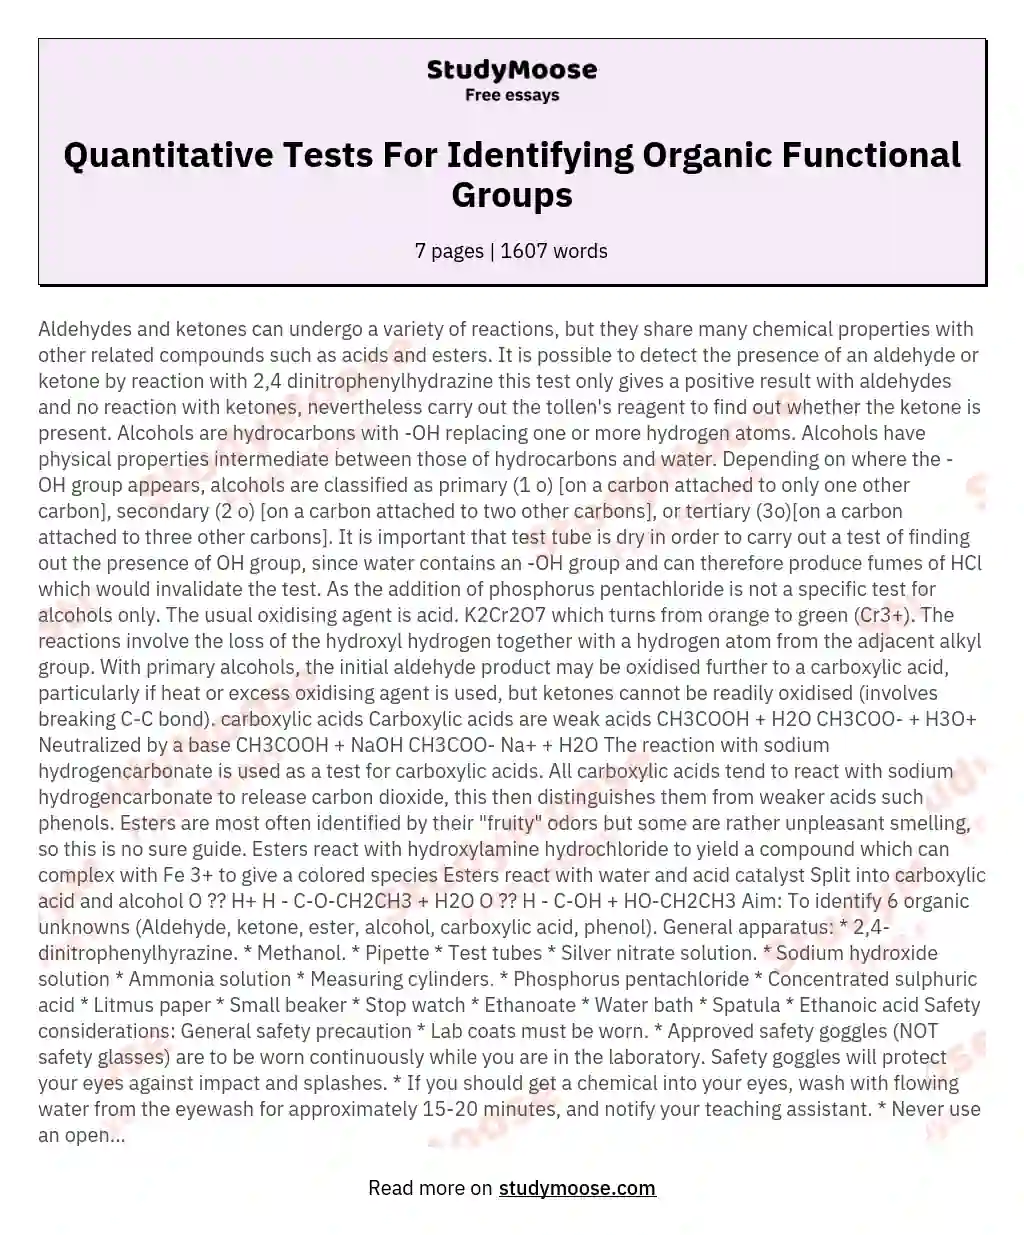 Quantitative Tests For Identifying Organic Functional Groups